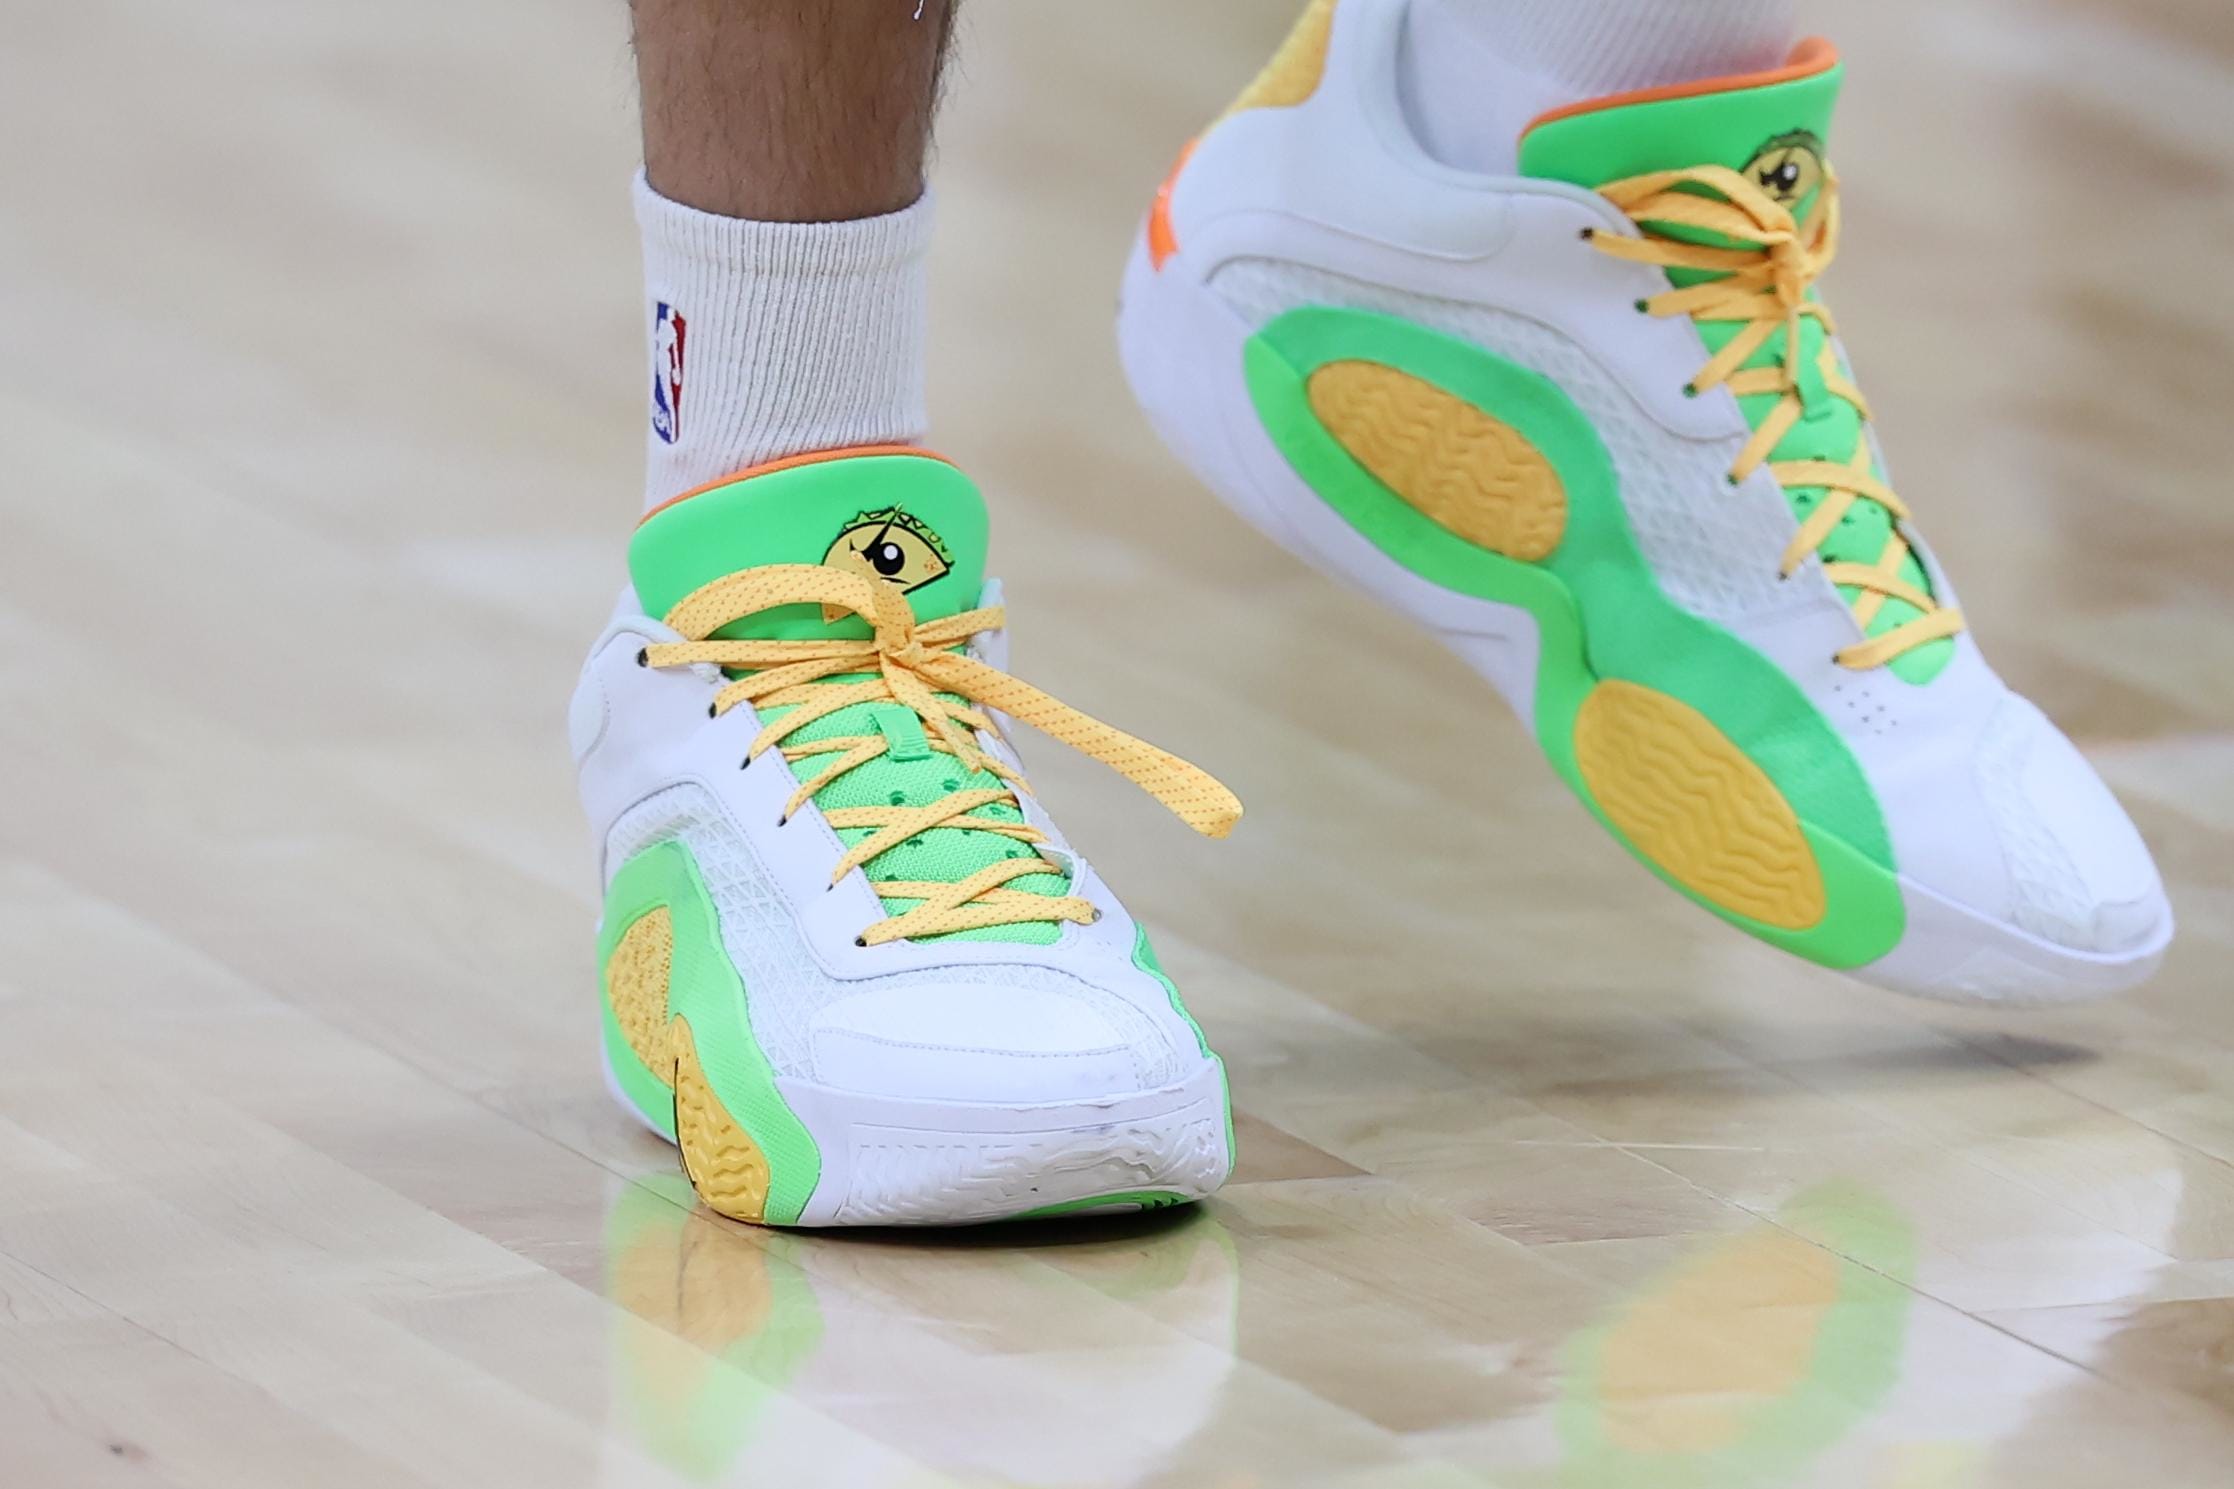 Boston Celtics forward Jayson Tatum's green sneakers.